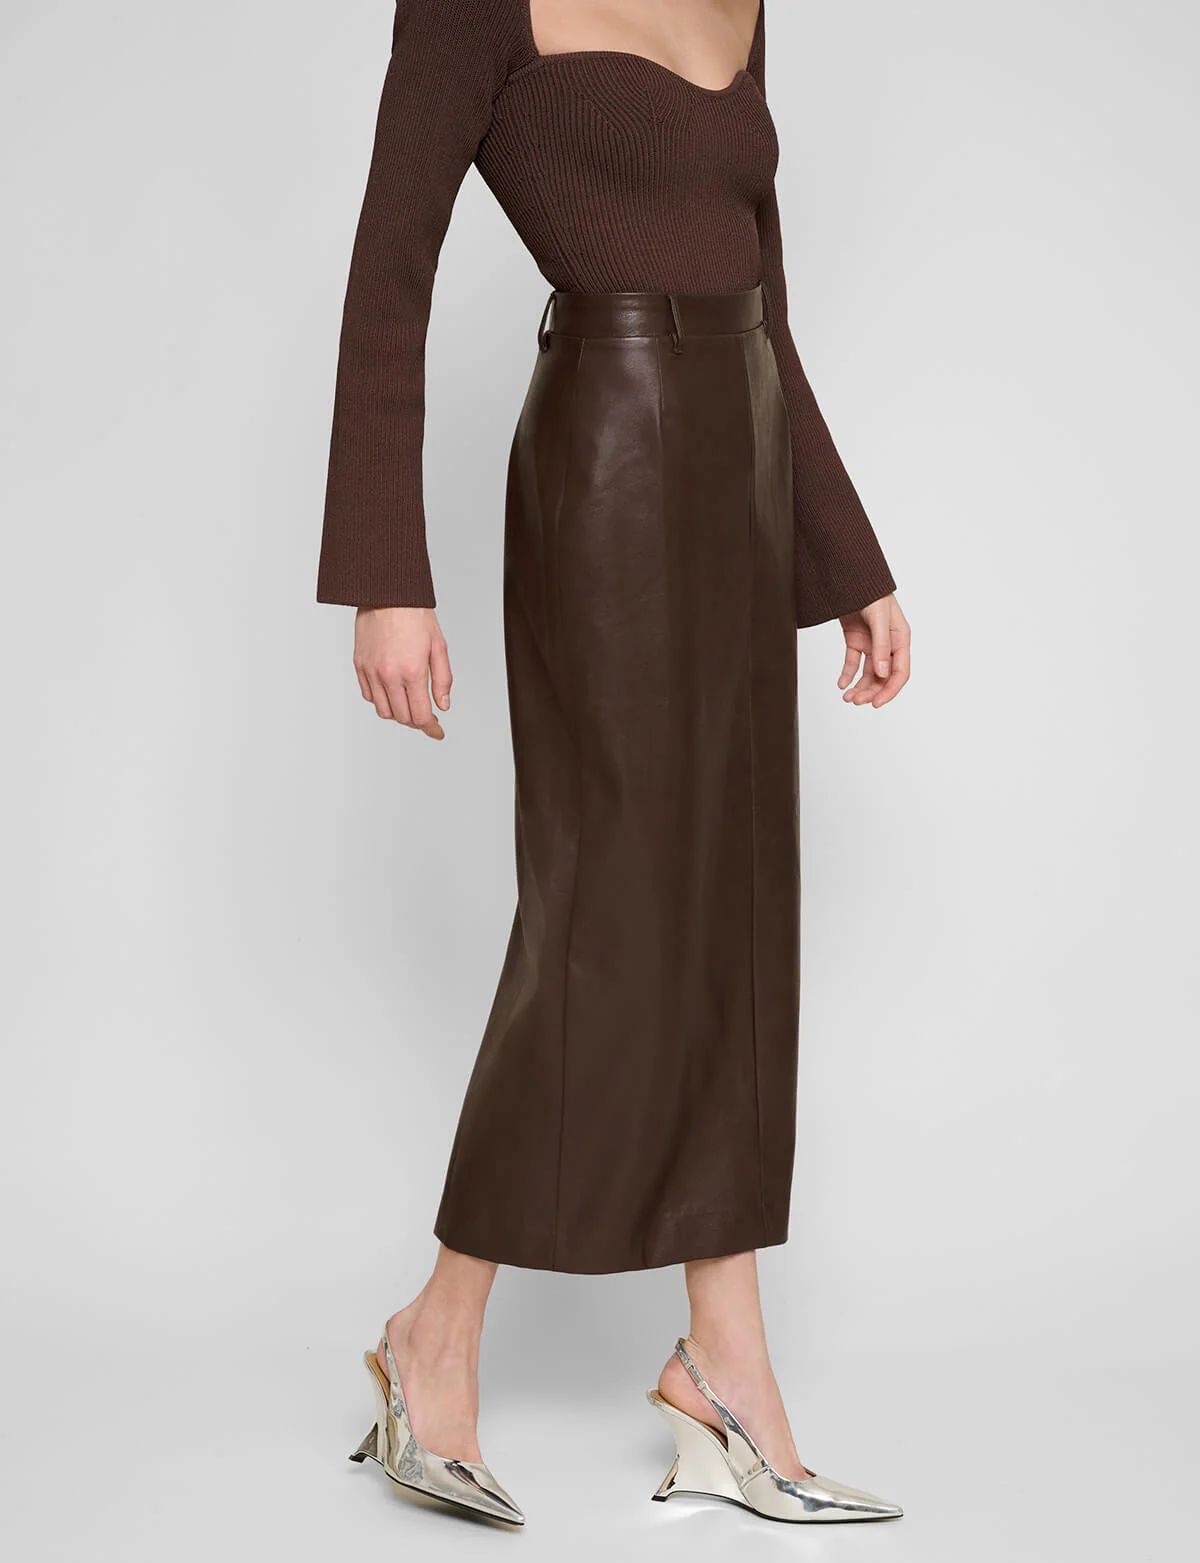 Yve Dark Brown Leather Pencil Skirt | Pixie Market